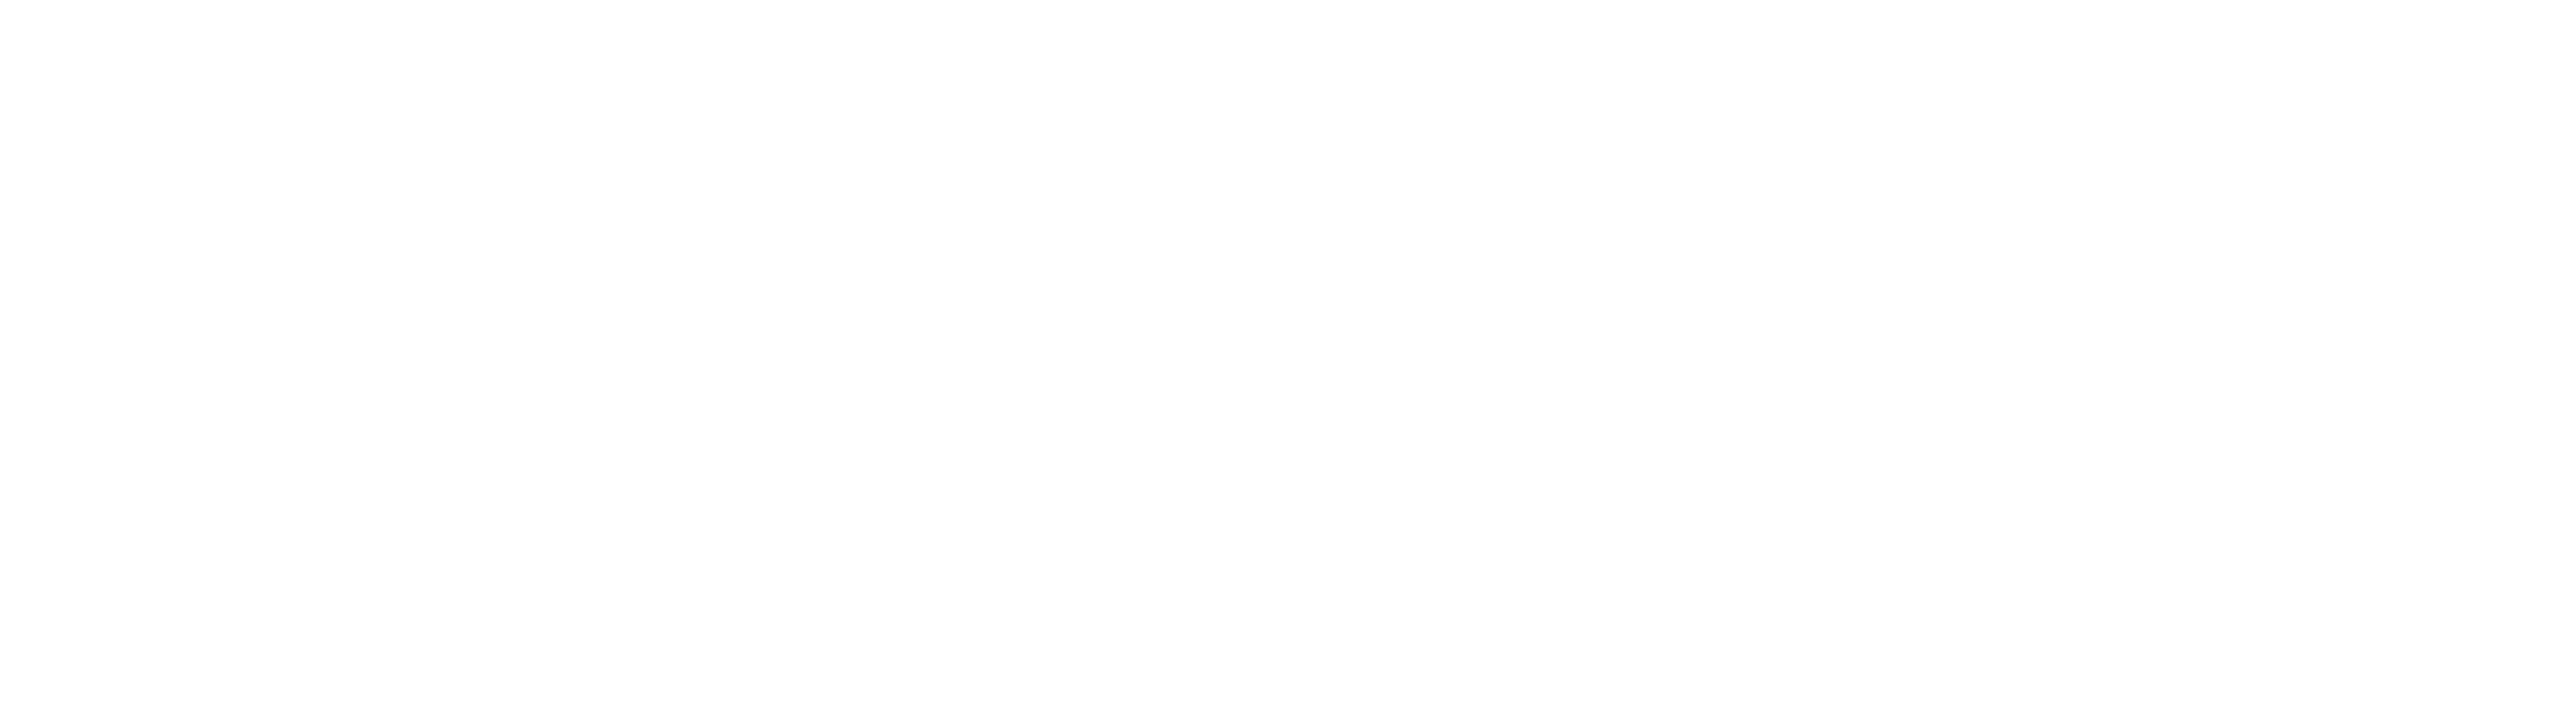 Napier Financial Management